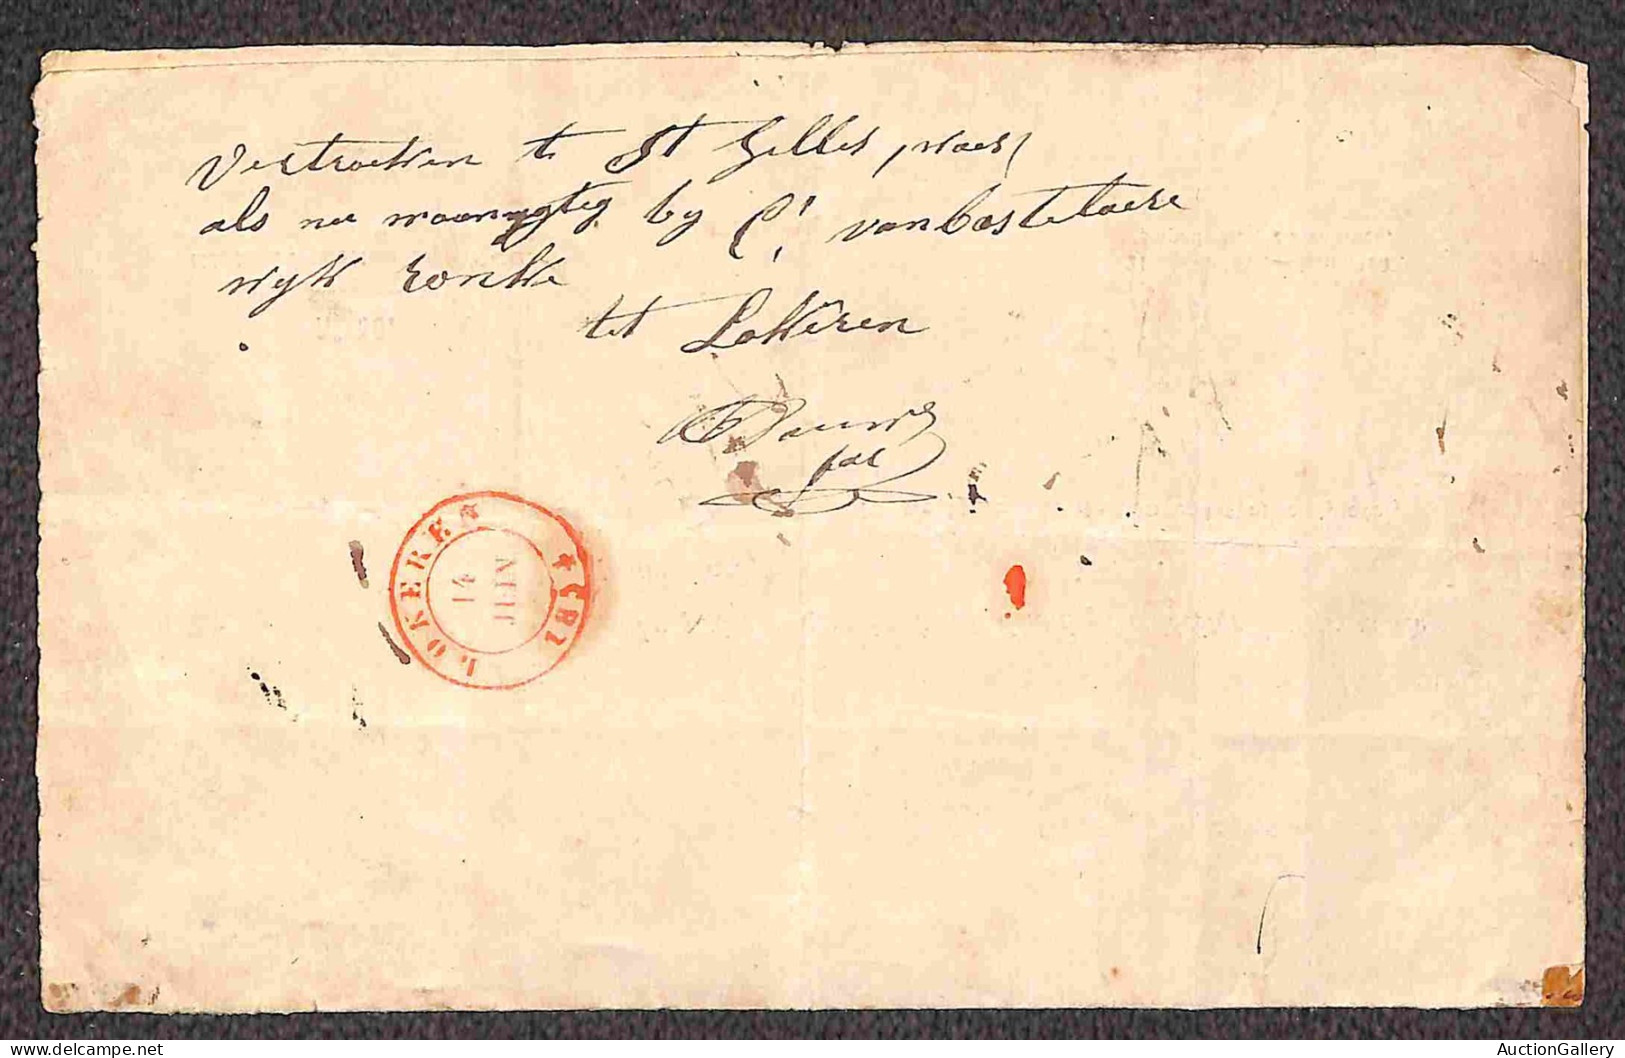 Europa - Belgio - 1854/1866 - Quattro lettere da Anversa (1853 + 1858) Liege (1866) e Lokeren (rosso 1854) - tassate